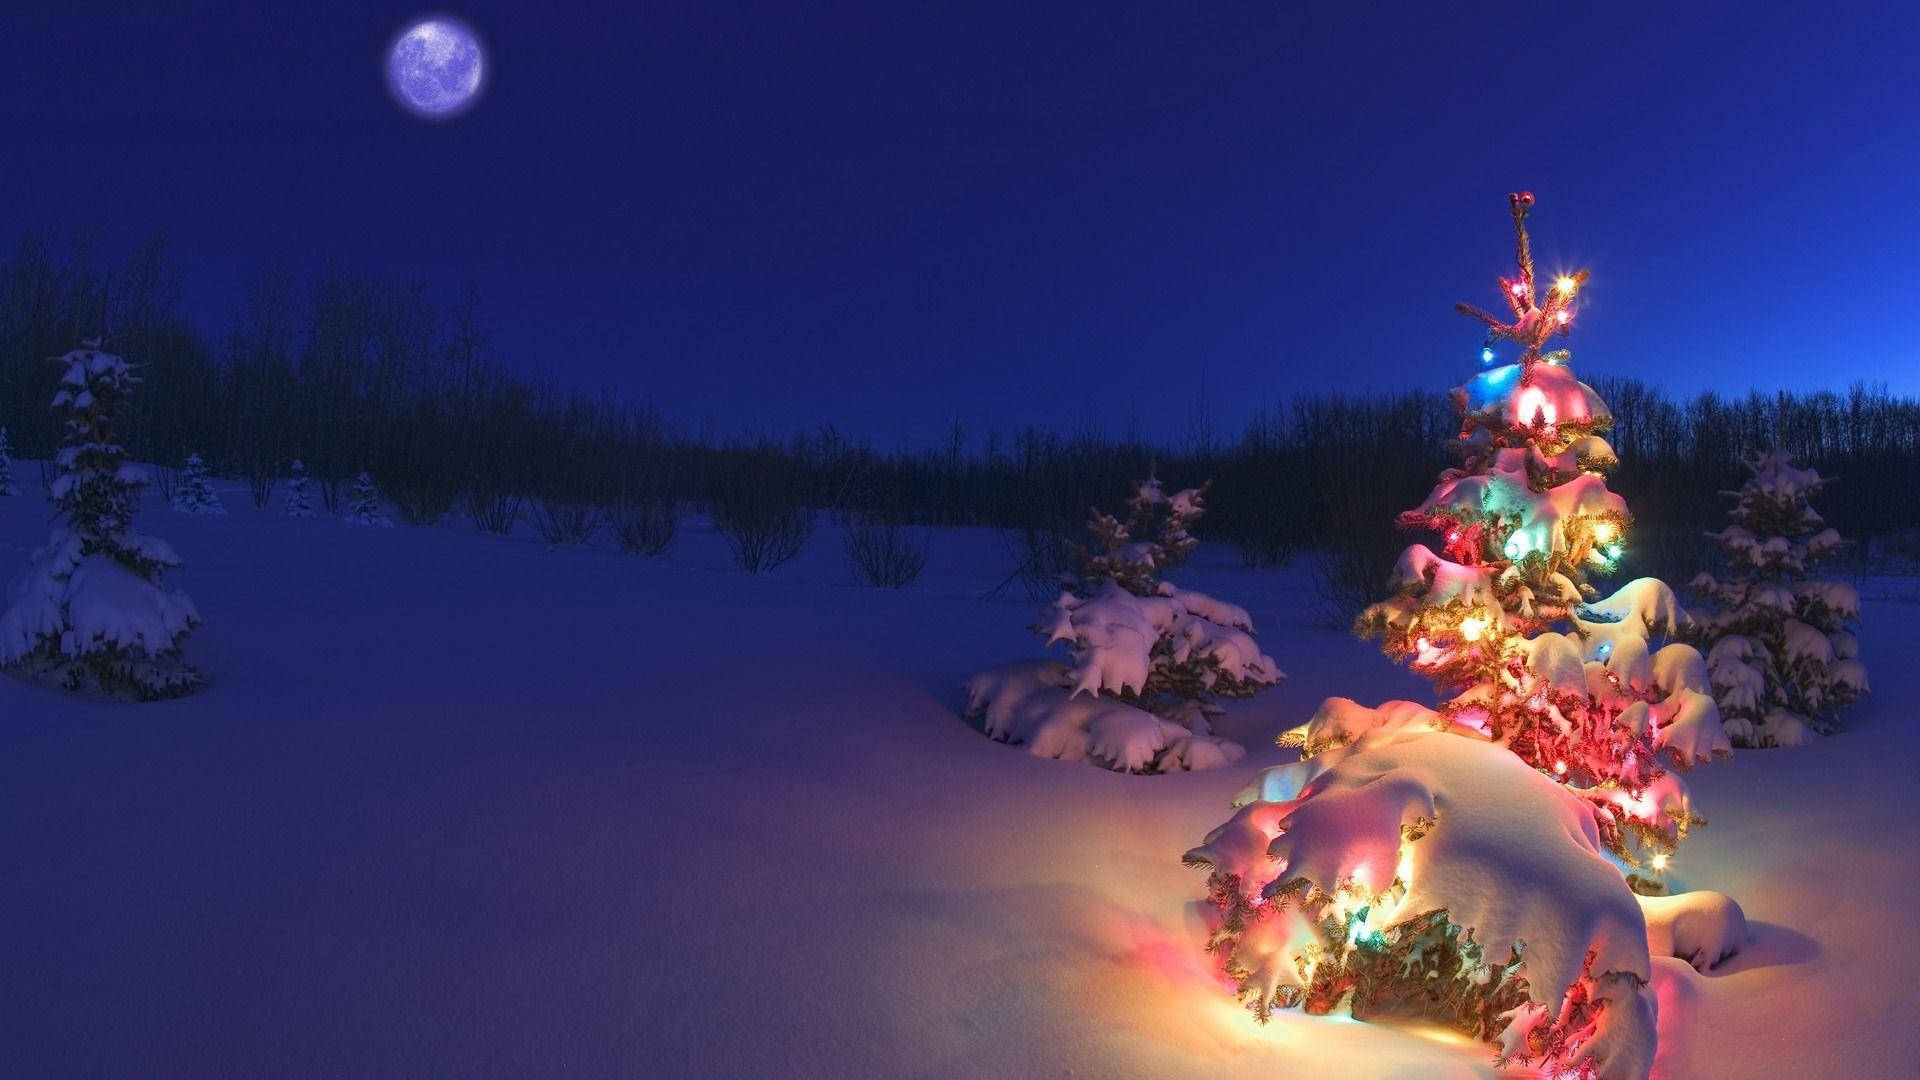 Bright Christmas Tree